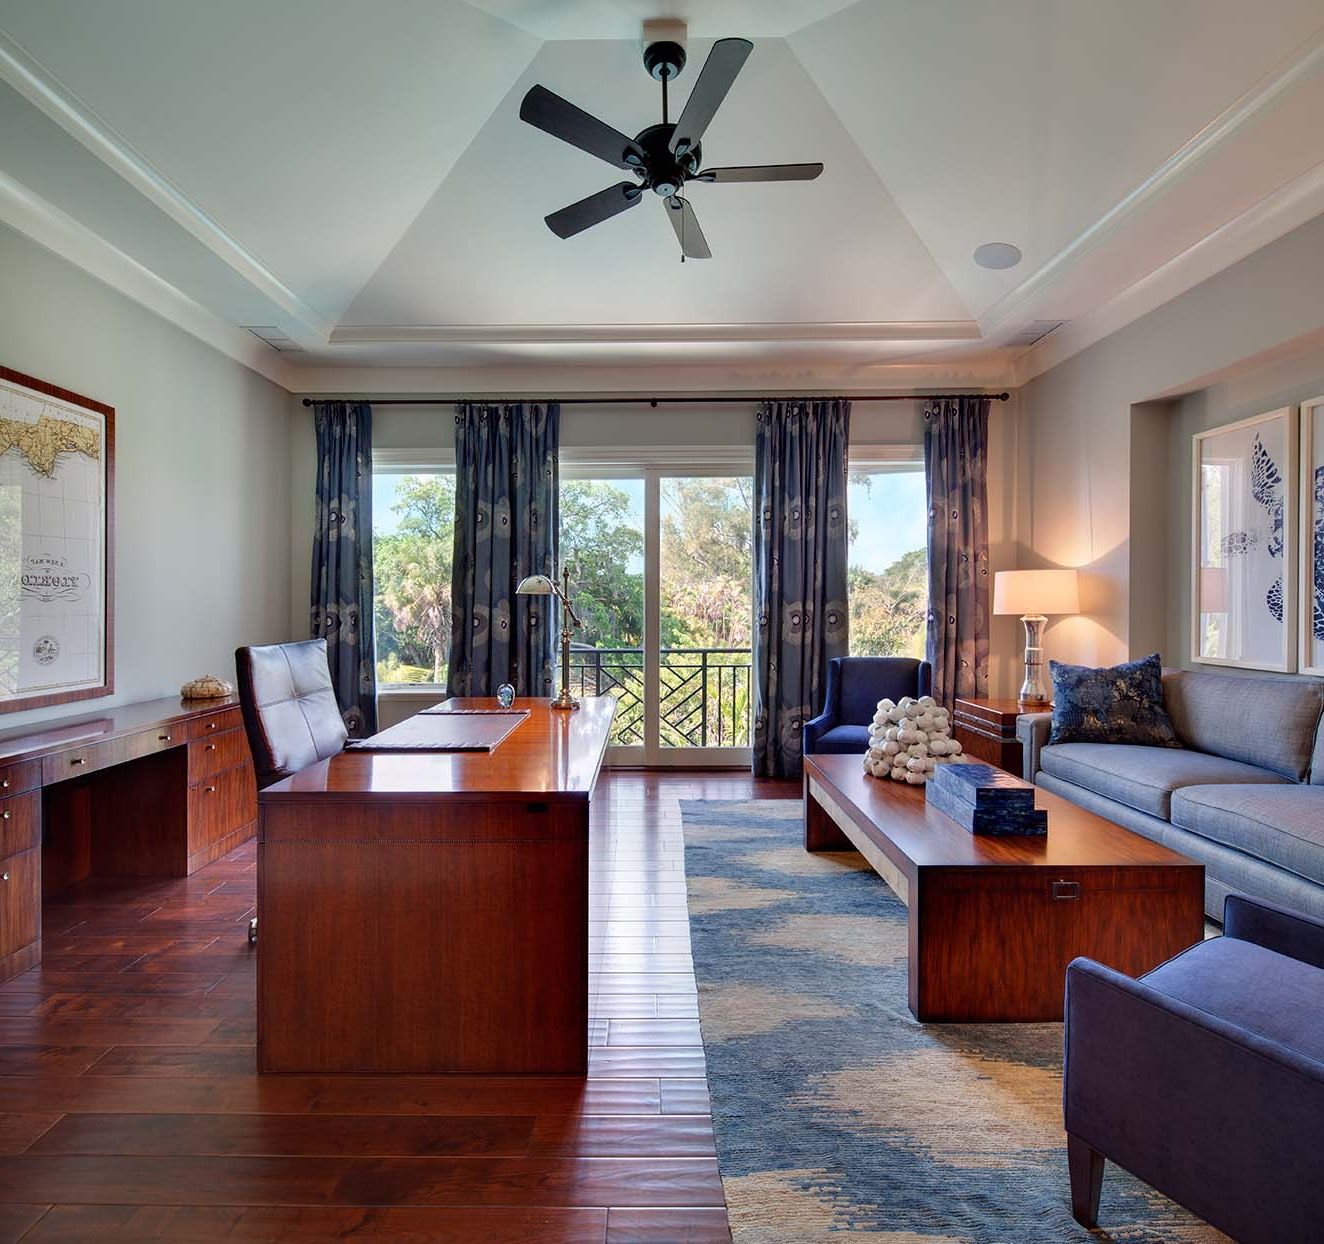 Luxury Modern Home Office Features Hardwood Floor (View 3 of 17)